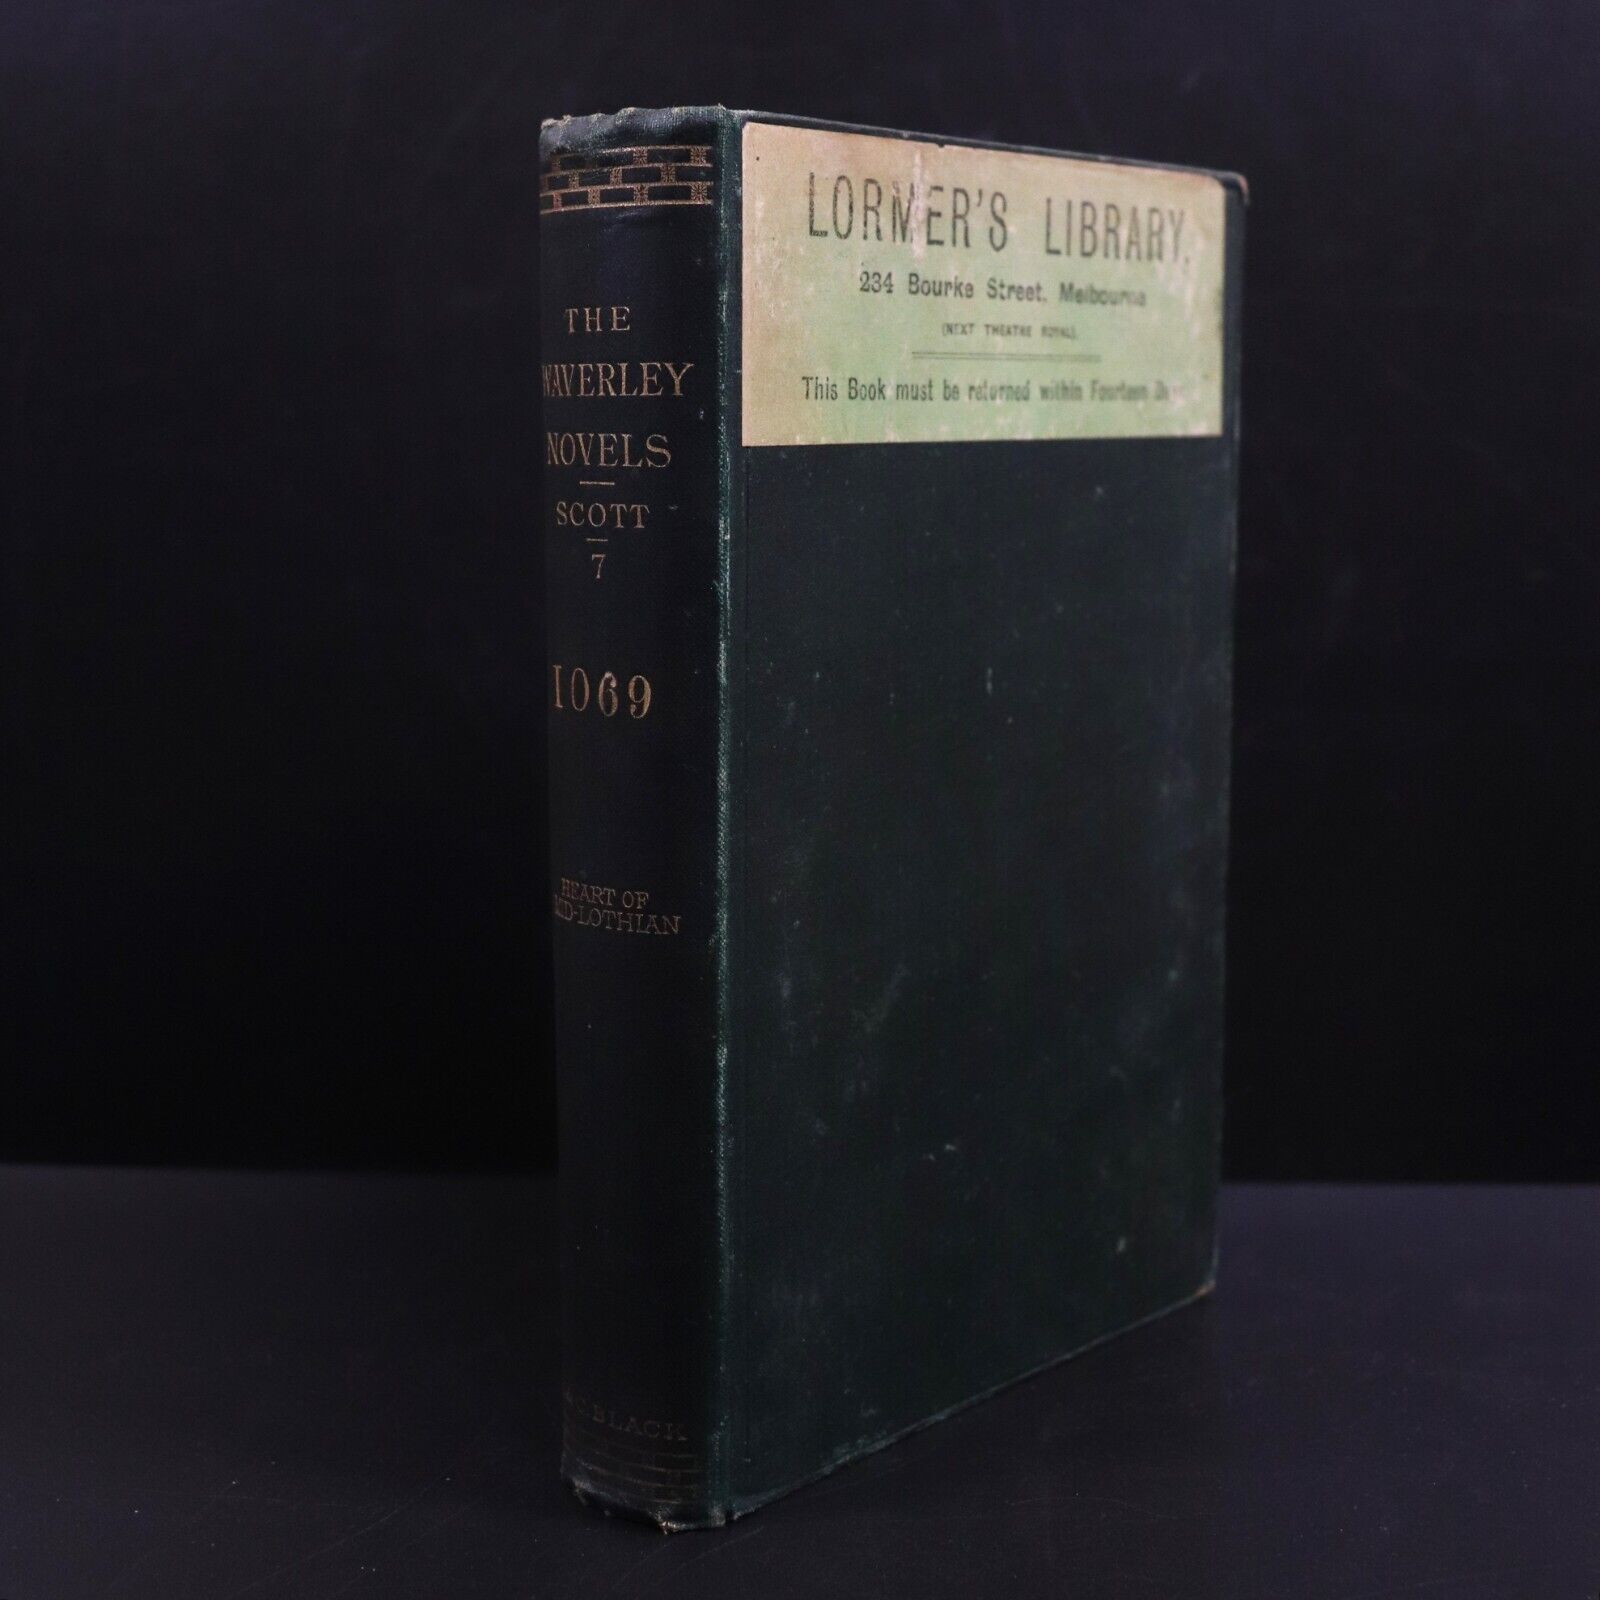 1886 Heart Of Mid-Lothian by Walter Scott Antique Fiction Book Waverley Novels